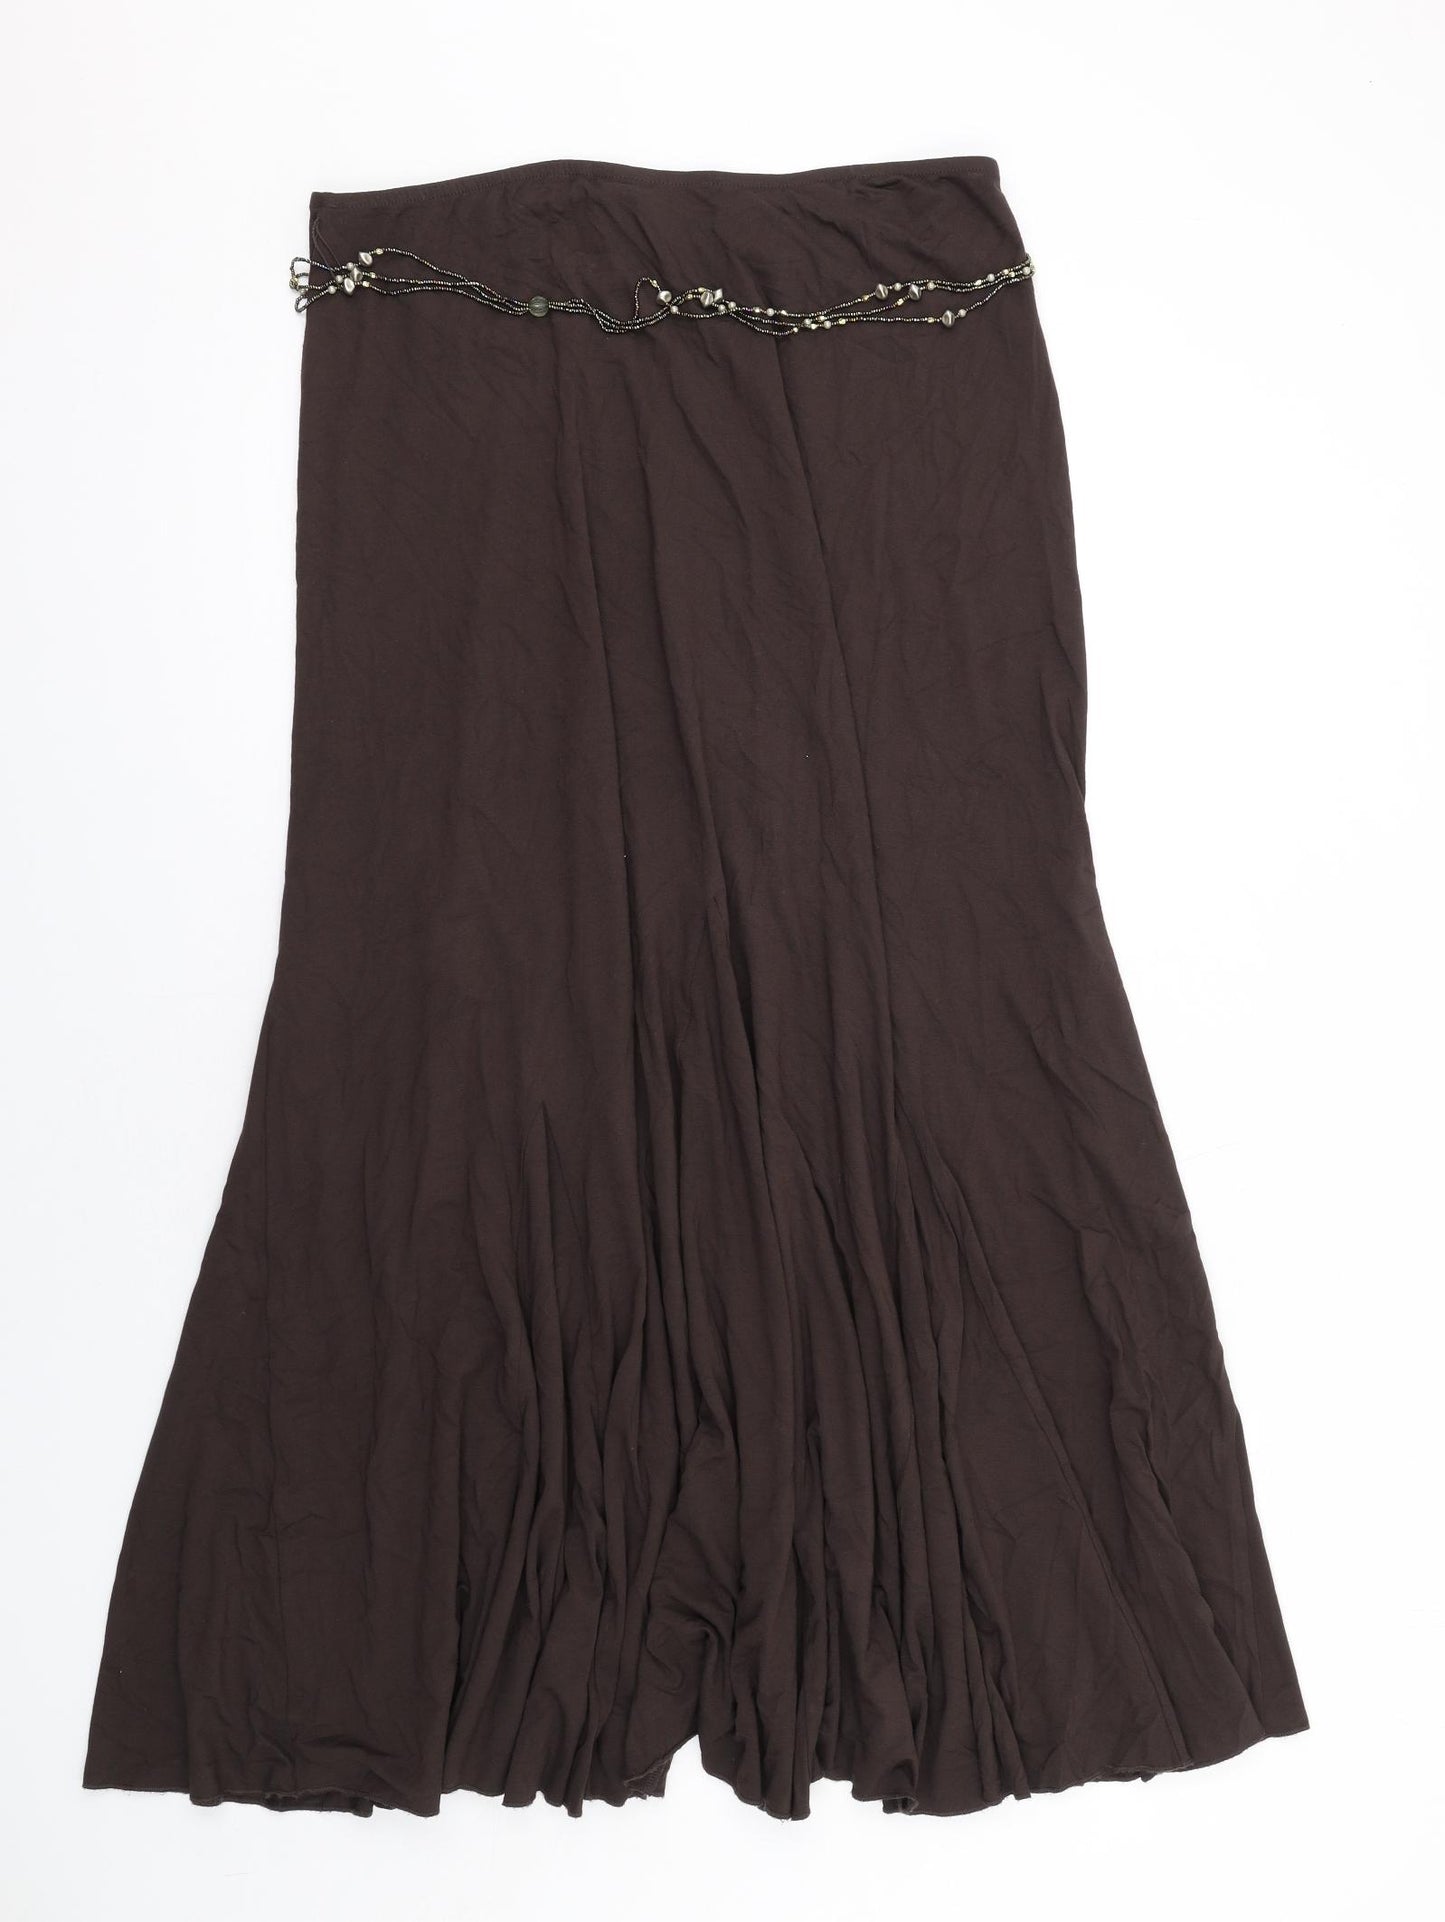 Per Una Womens Brown Viscose Maxi Skirt Size 16 - Belt included